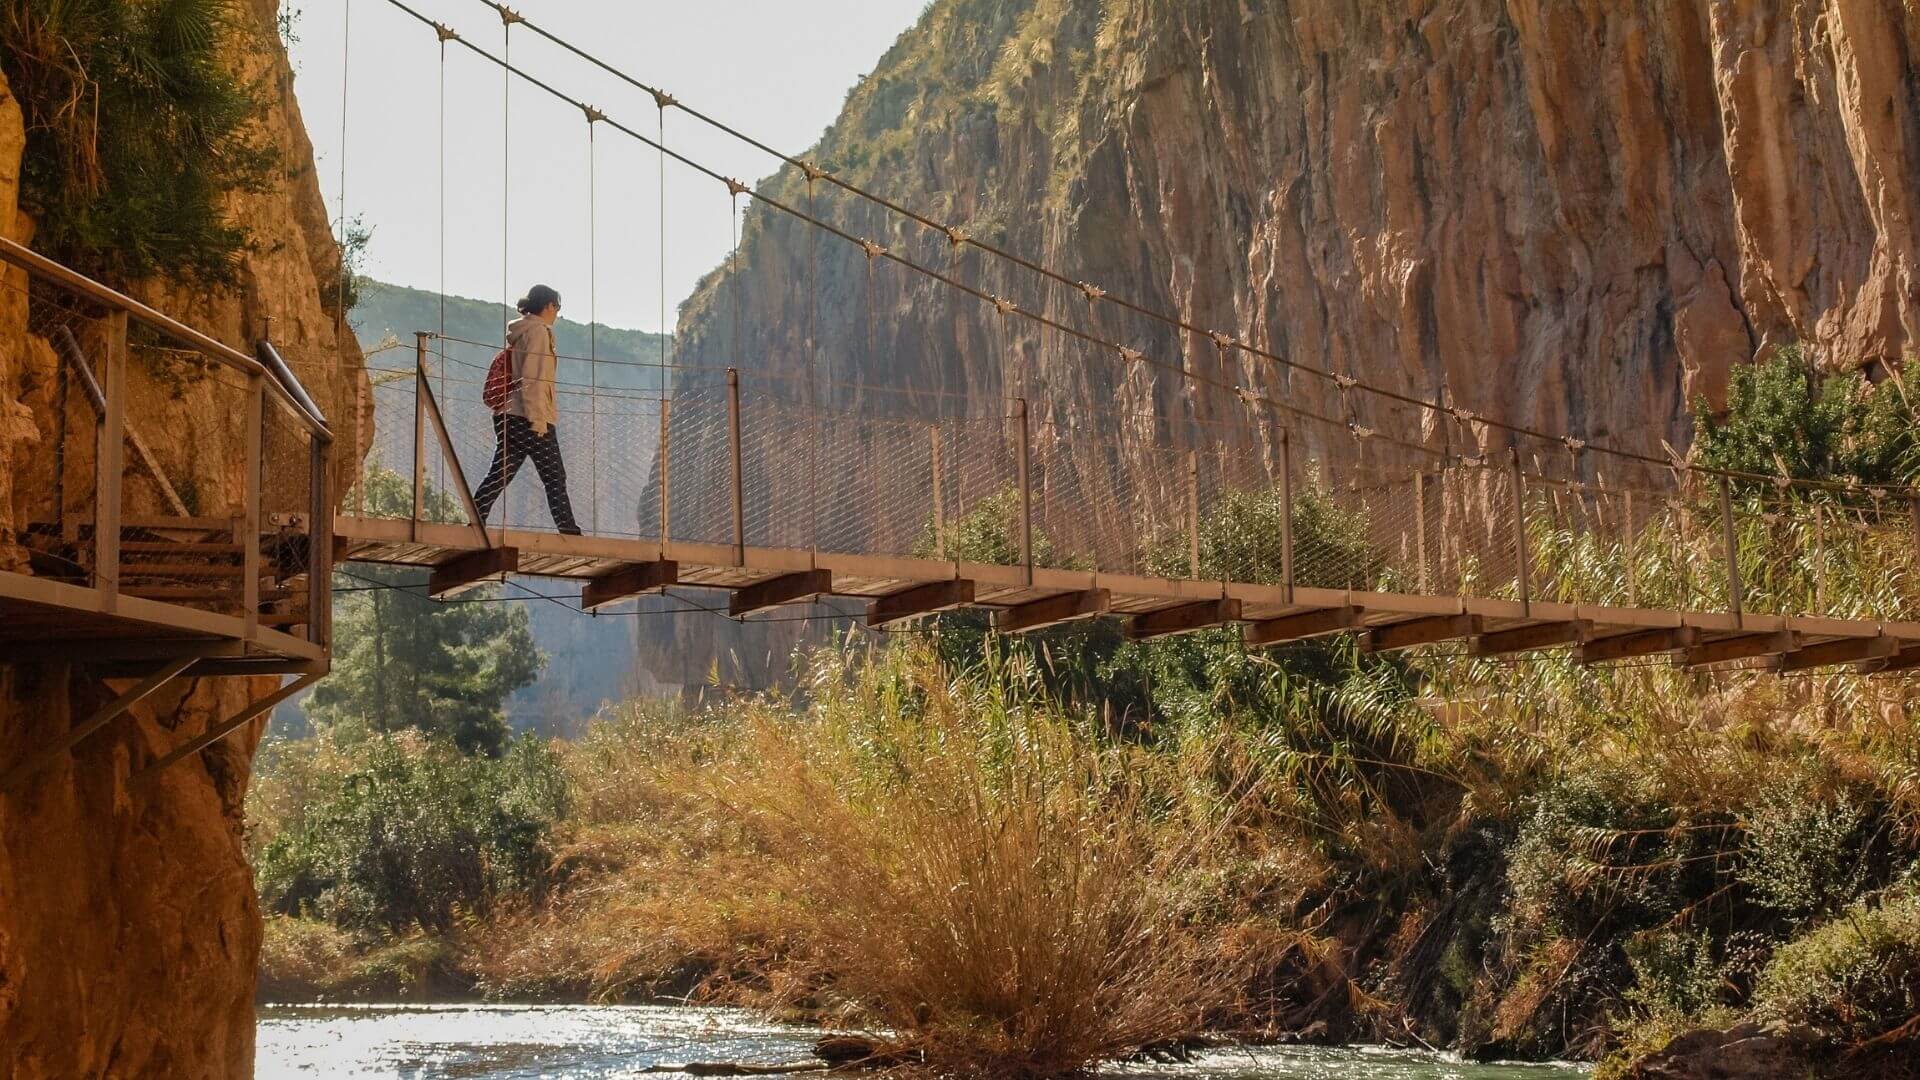 Supera tus límites en la ruta de los puentes colgantes de Chulilla